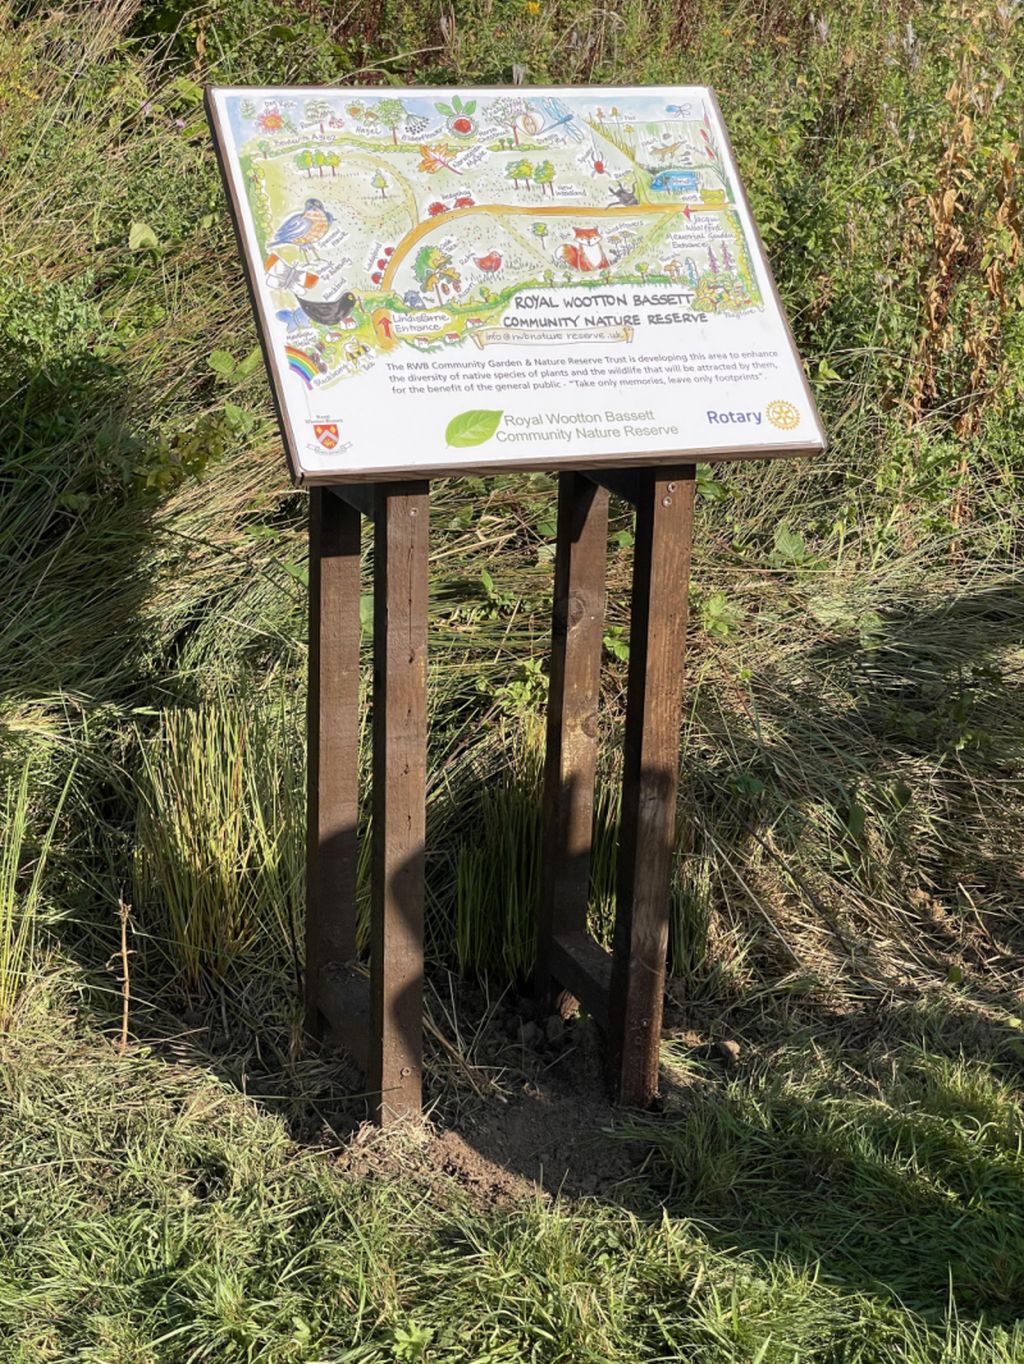 The RWB Shed Nature Reserve signage